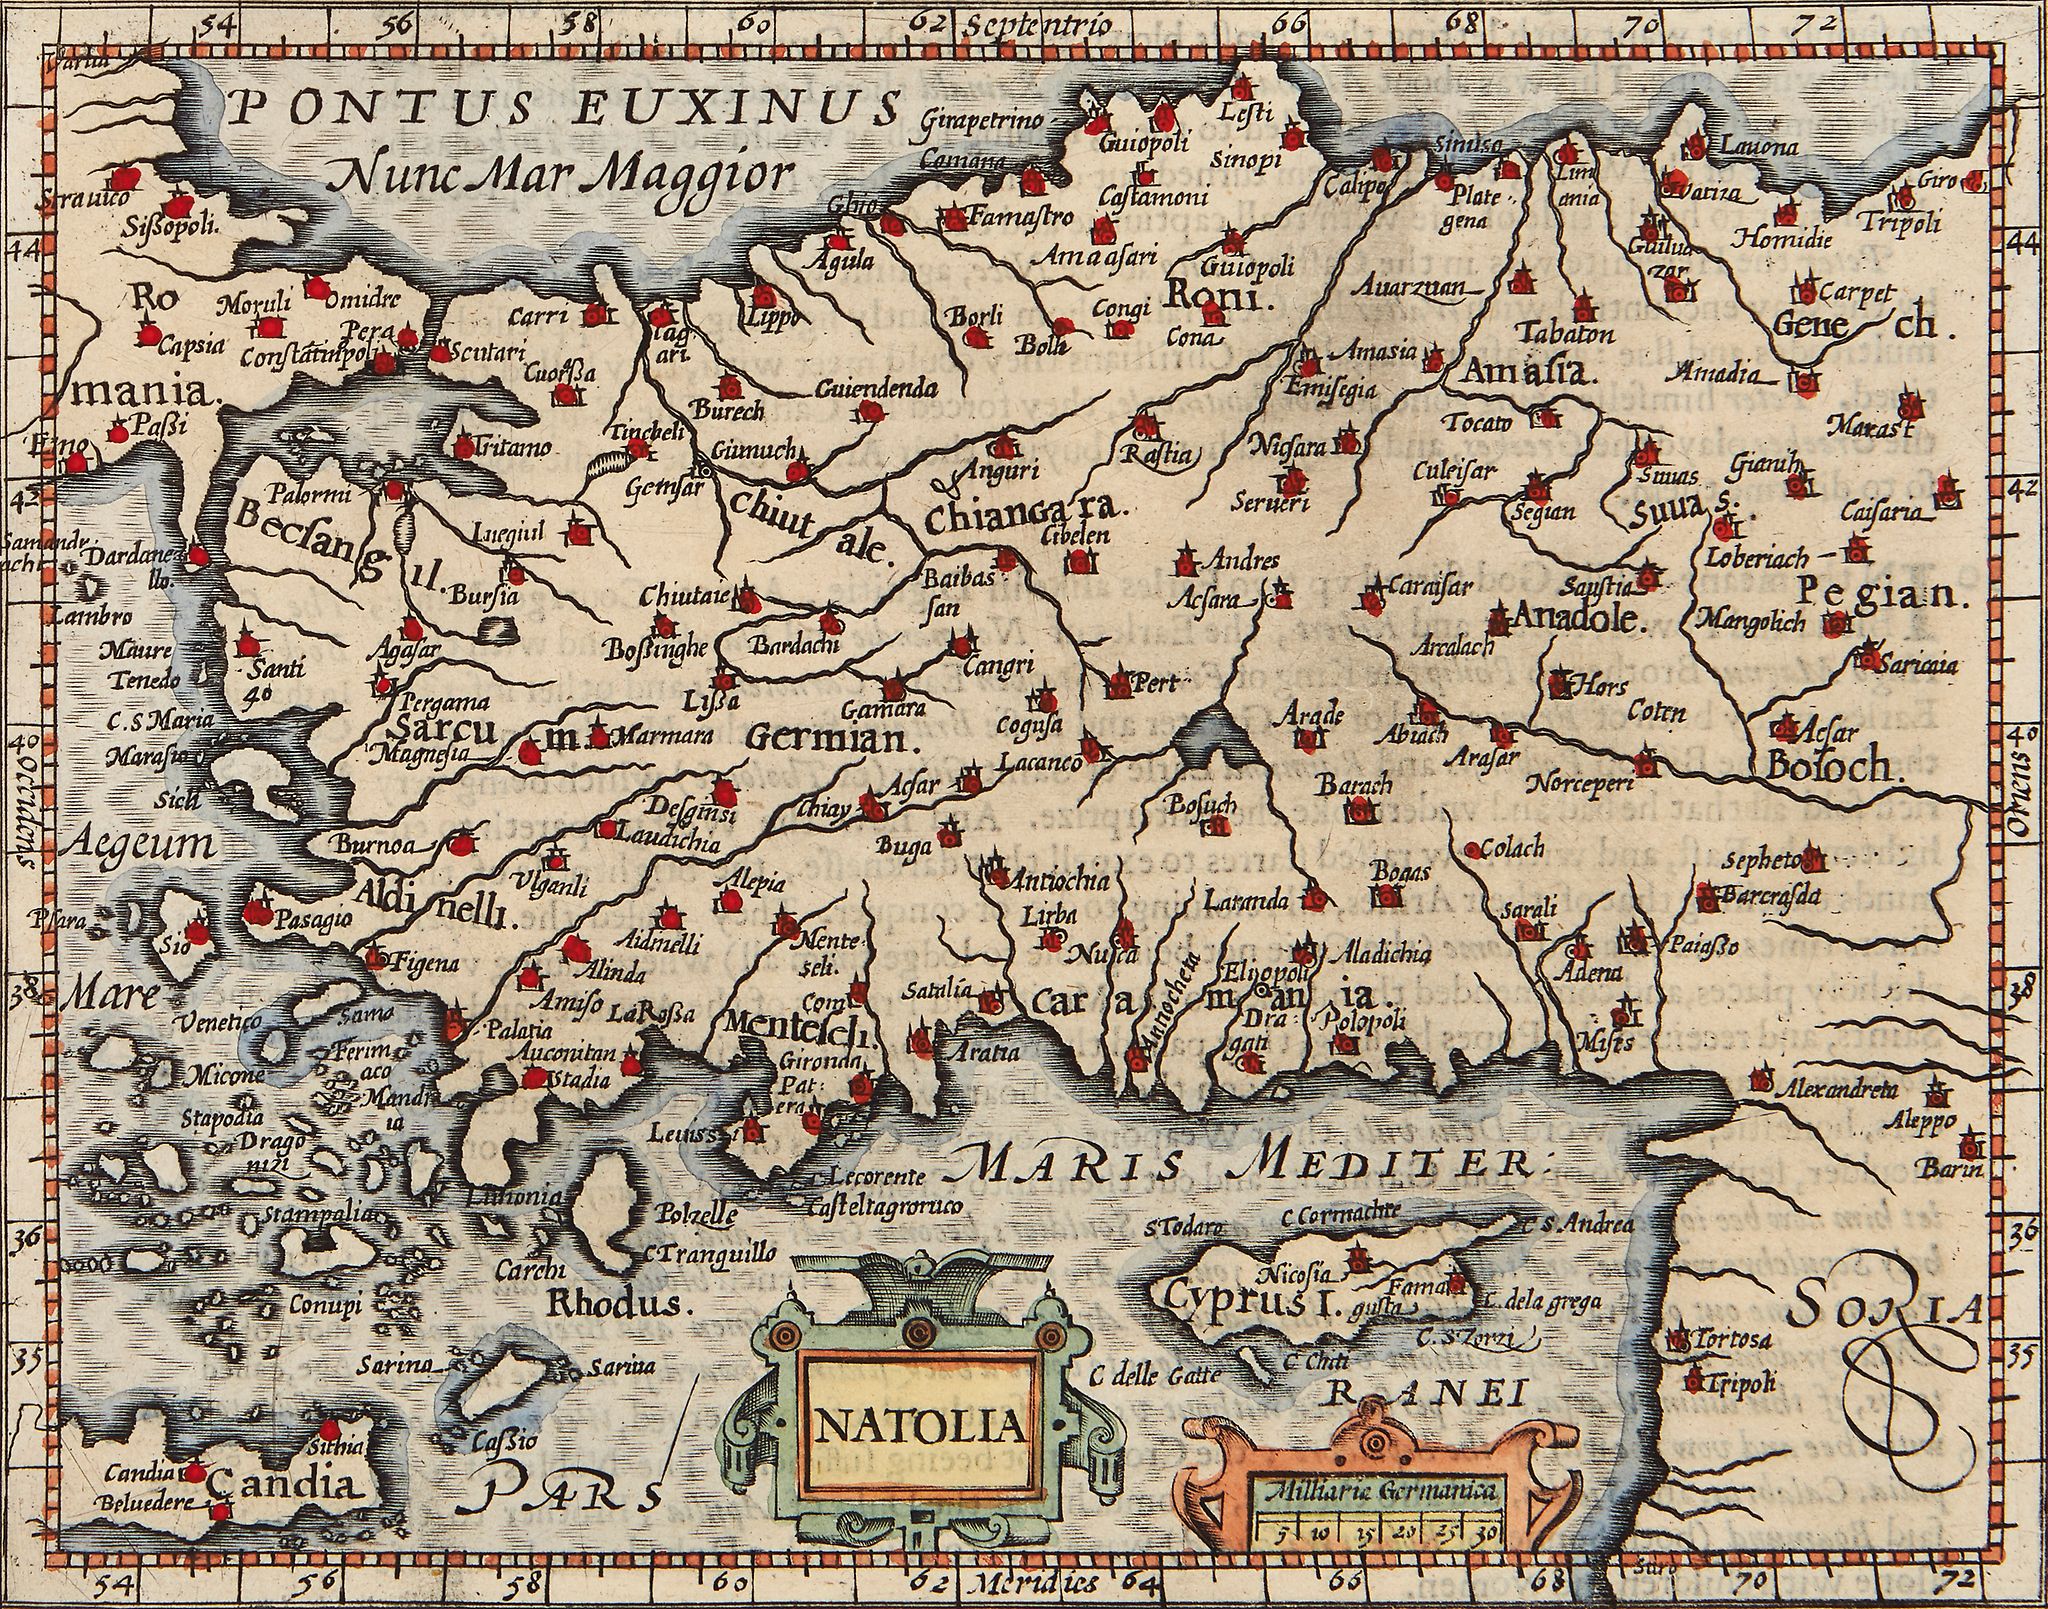 Hondius (Jodocus), Natoliae sive Asia Minor, Turkey and surrounding Islands, after Mercator,